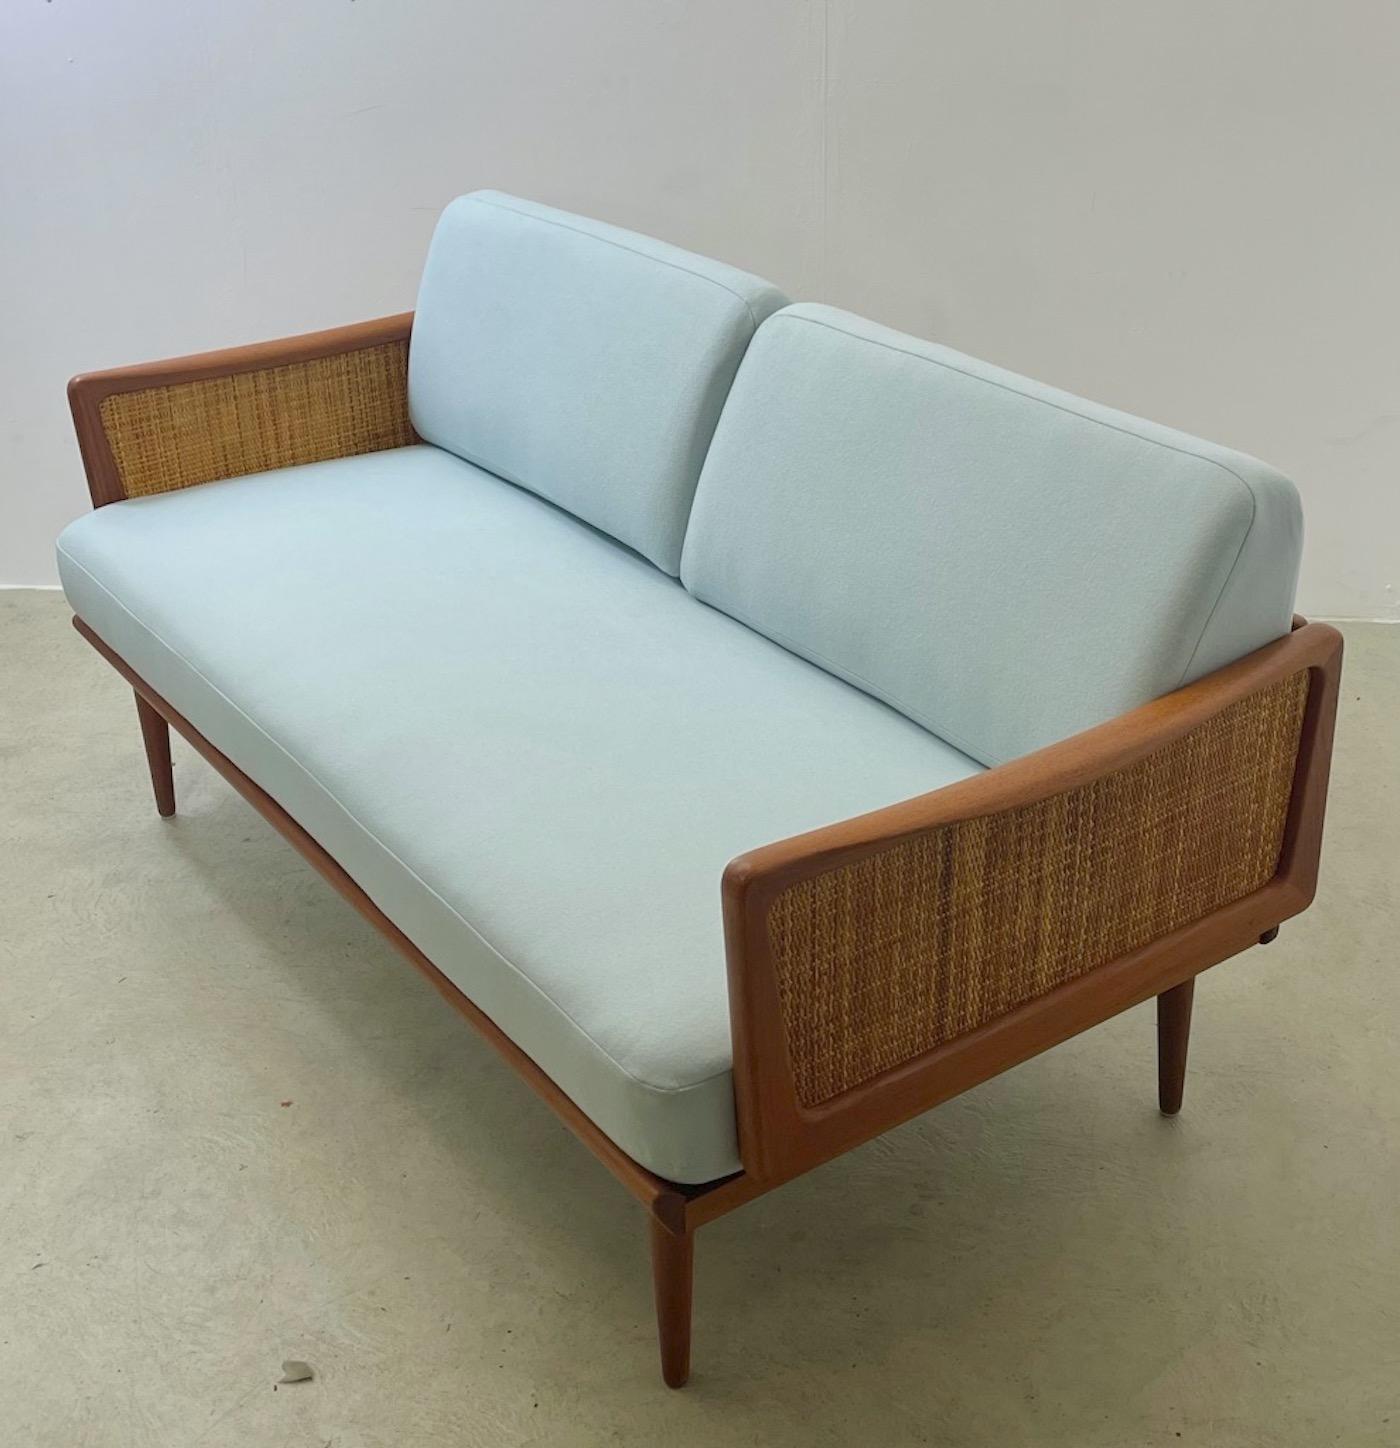 50s style sofa